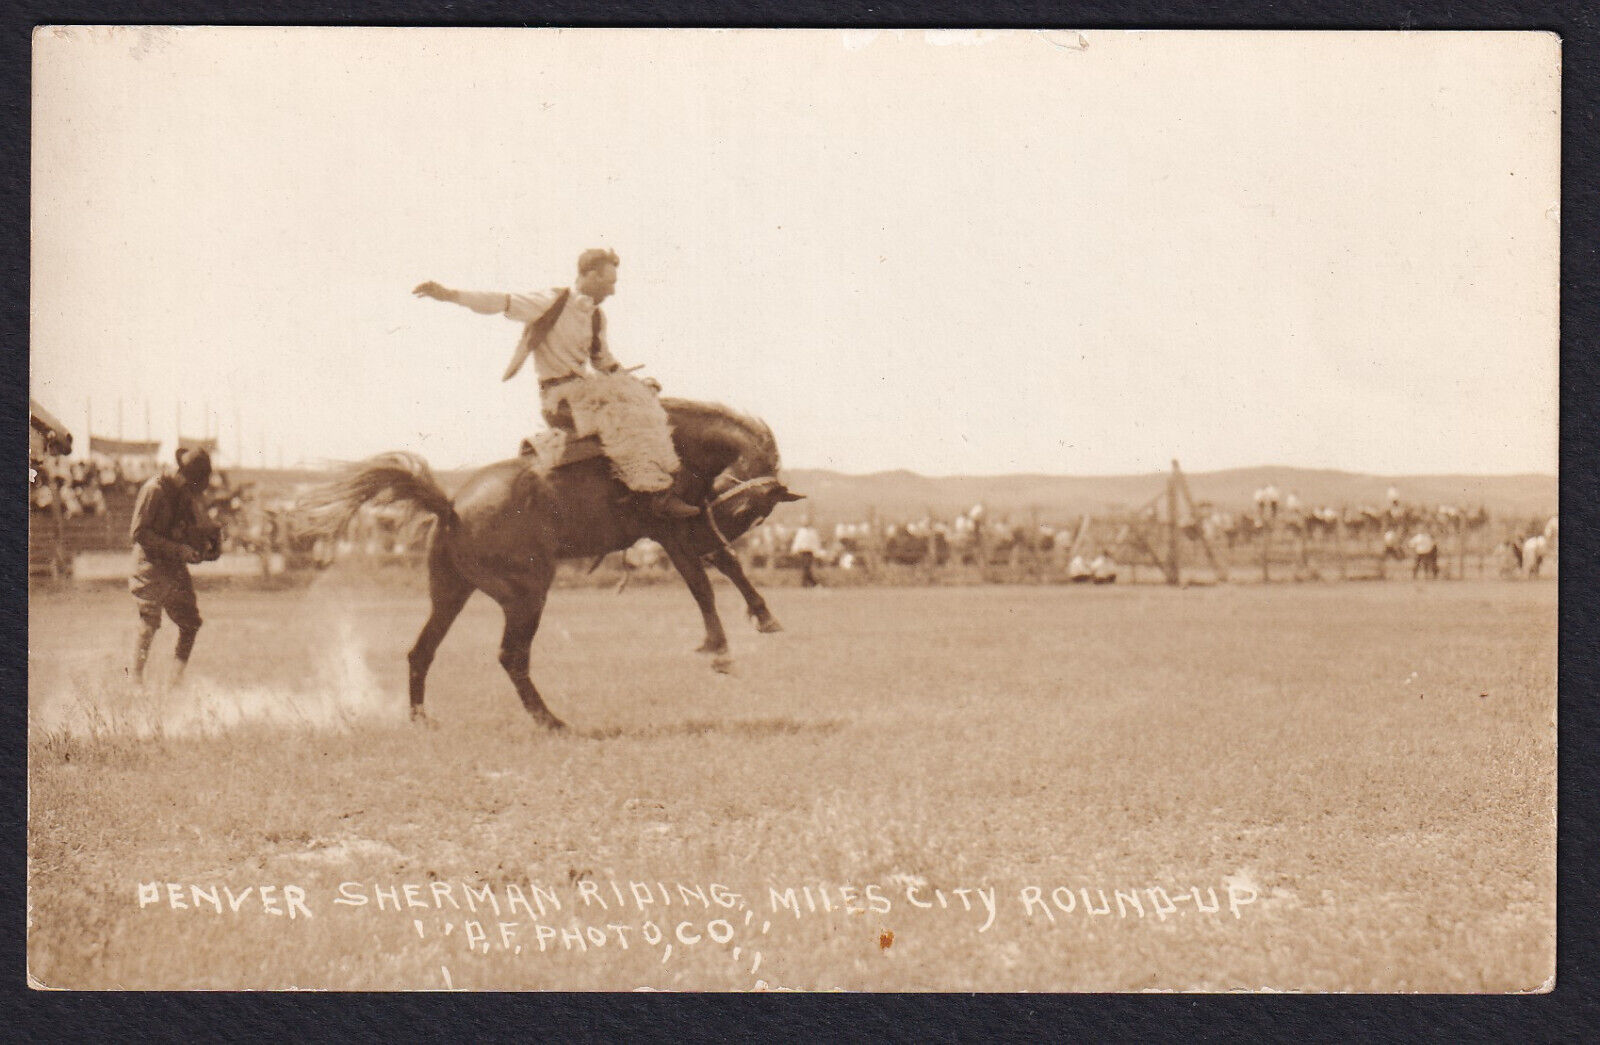 Montana-Miles City Roundup-Rodeo-Denver Sherman Riding-A.F. Photo Postcard